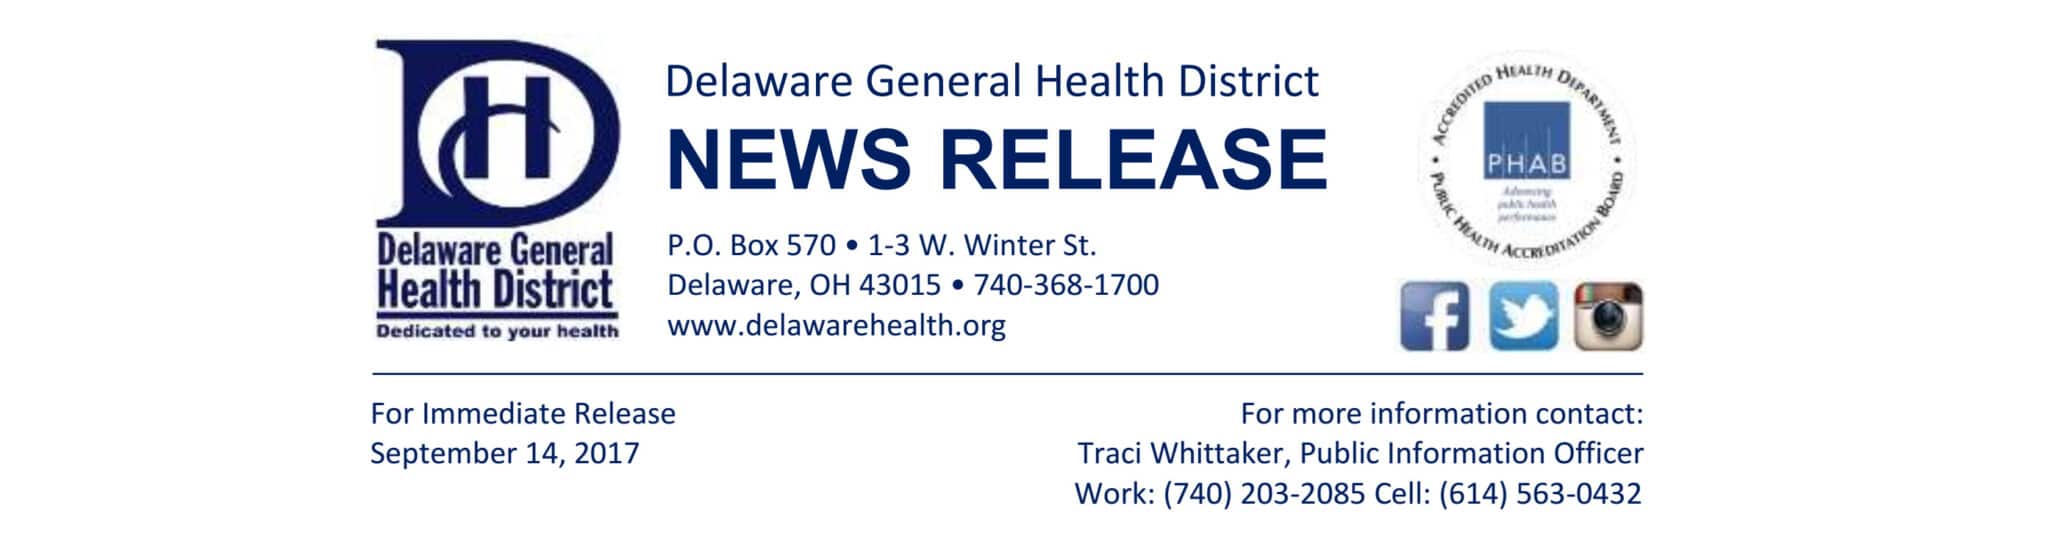 Delaware General Health District Press Release